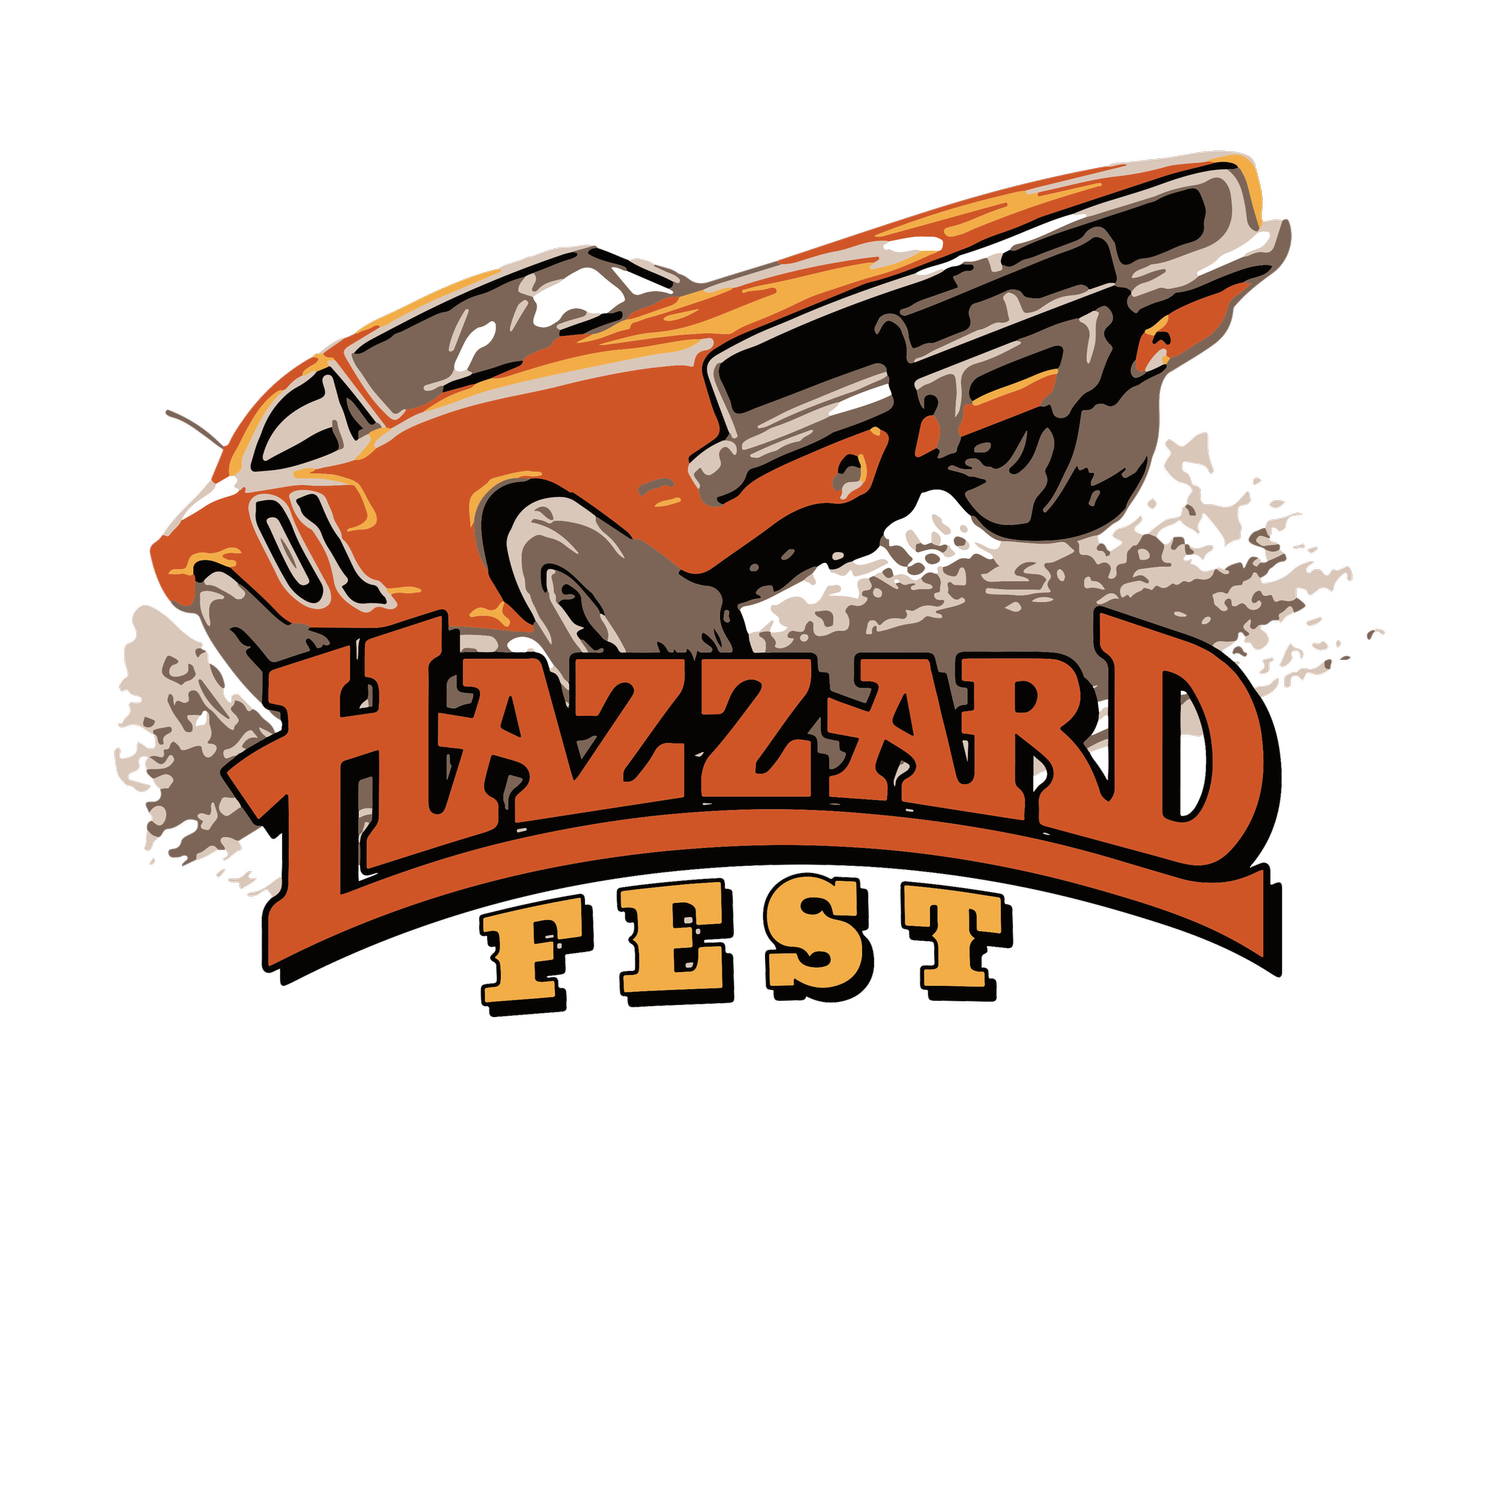 Hazzard Fest